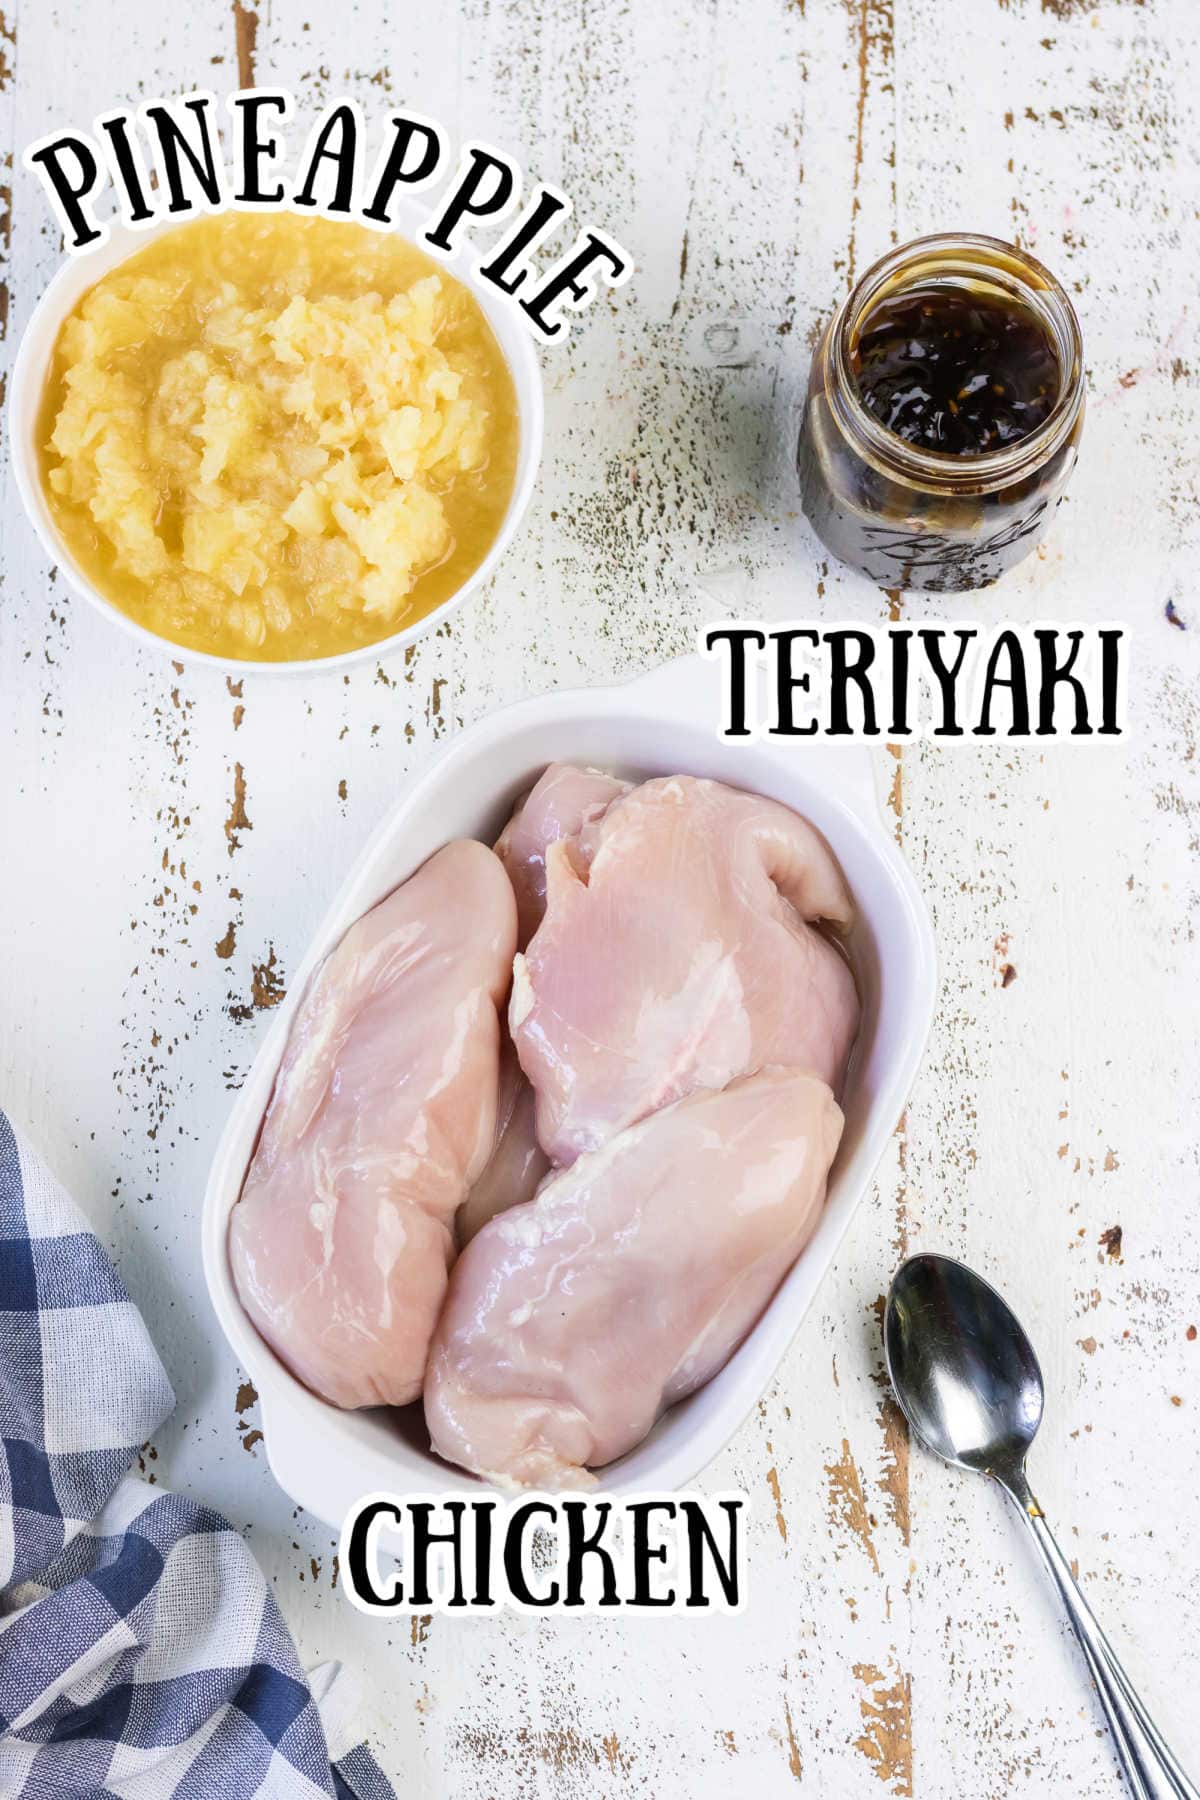 Labeled ingredients for teriyaki chicken.